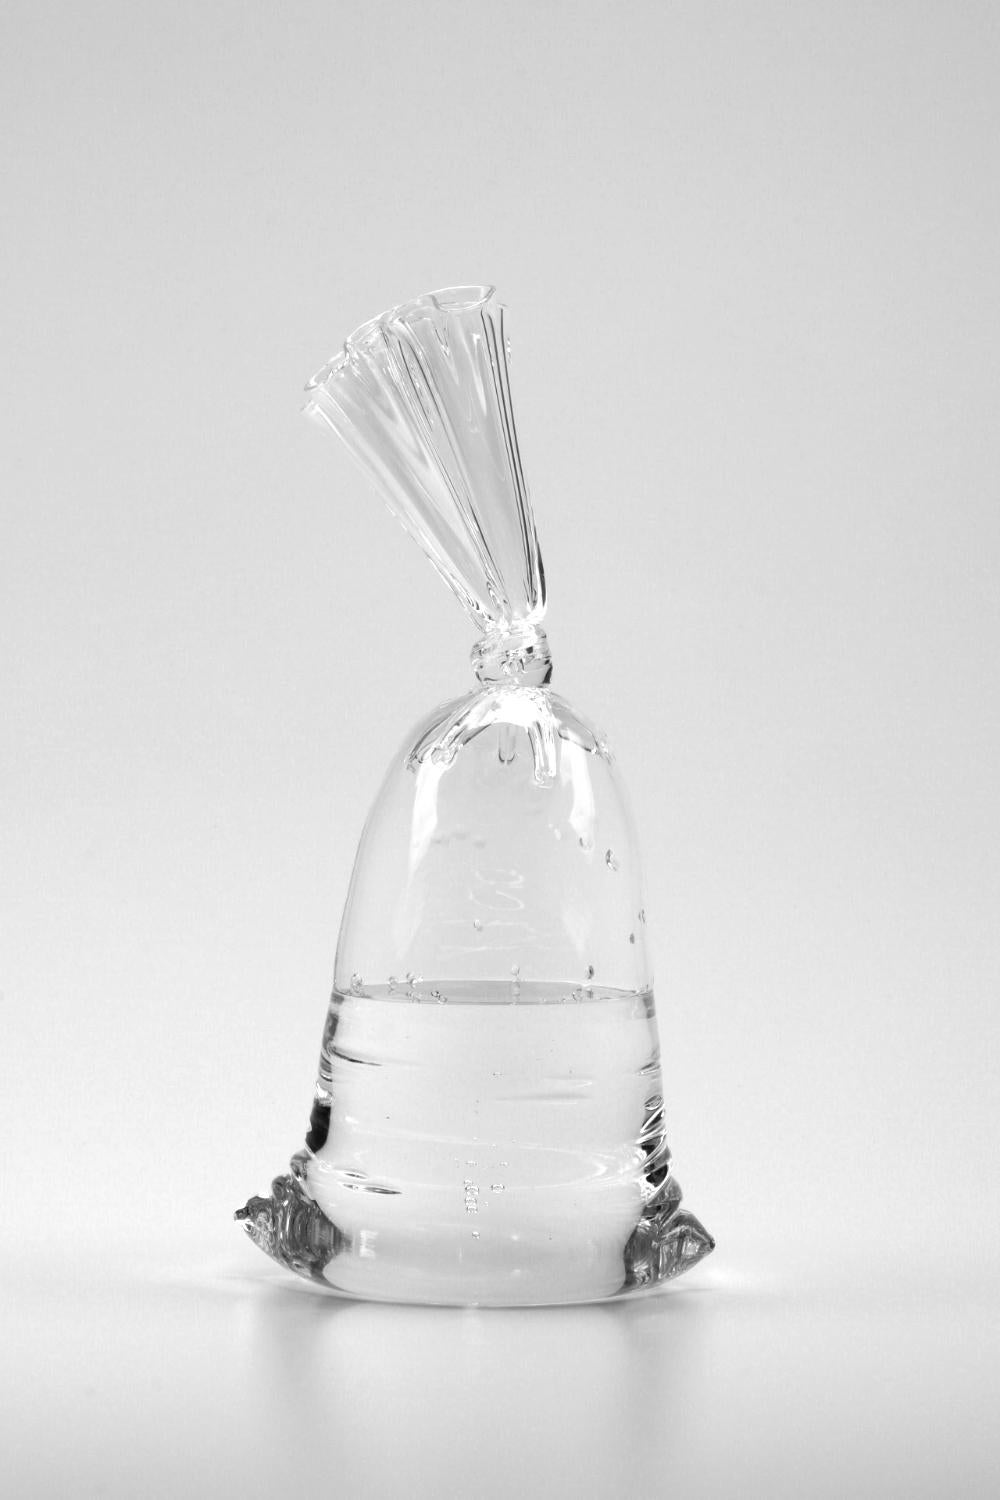 Dylan Martinez Abstract Sculpture - Small Glass Water Bag - Hyperreal glass sculpture